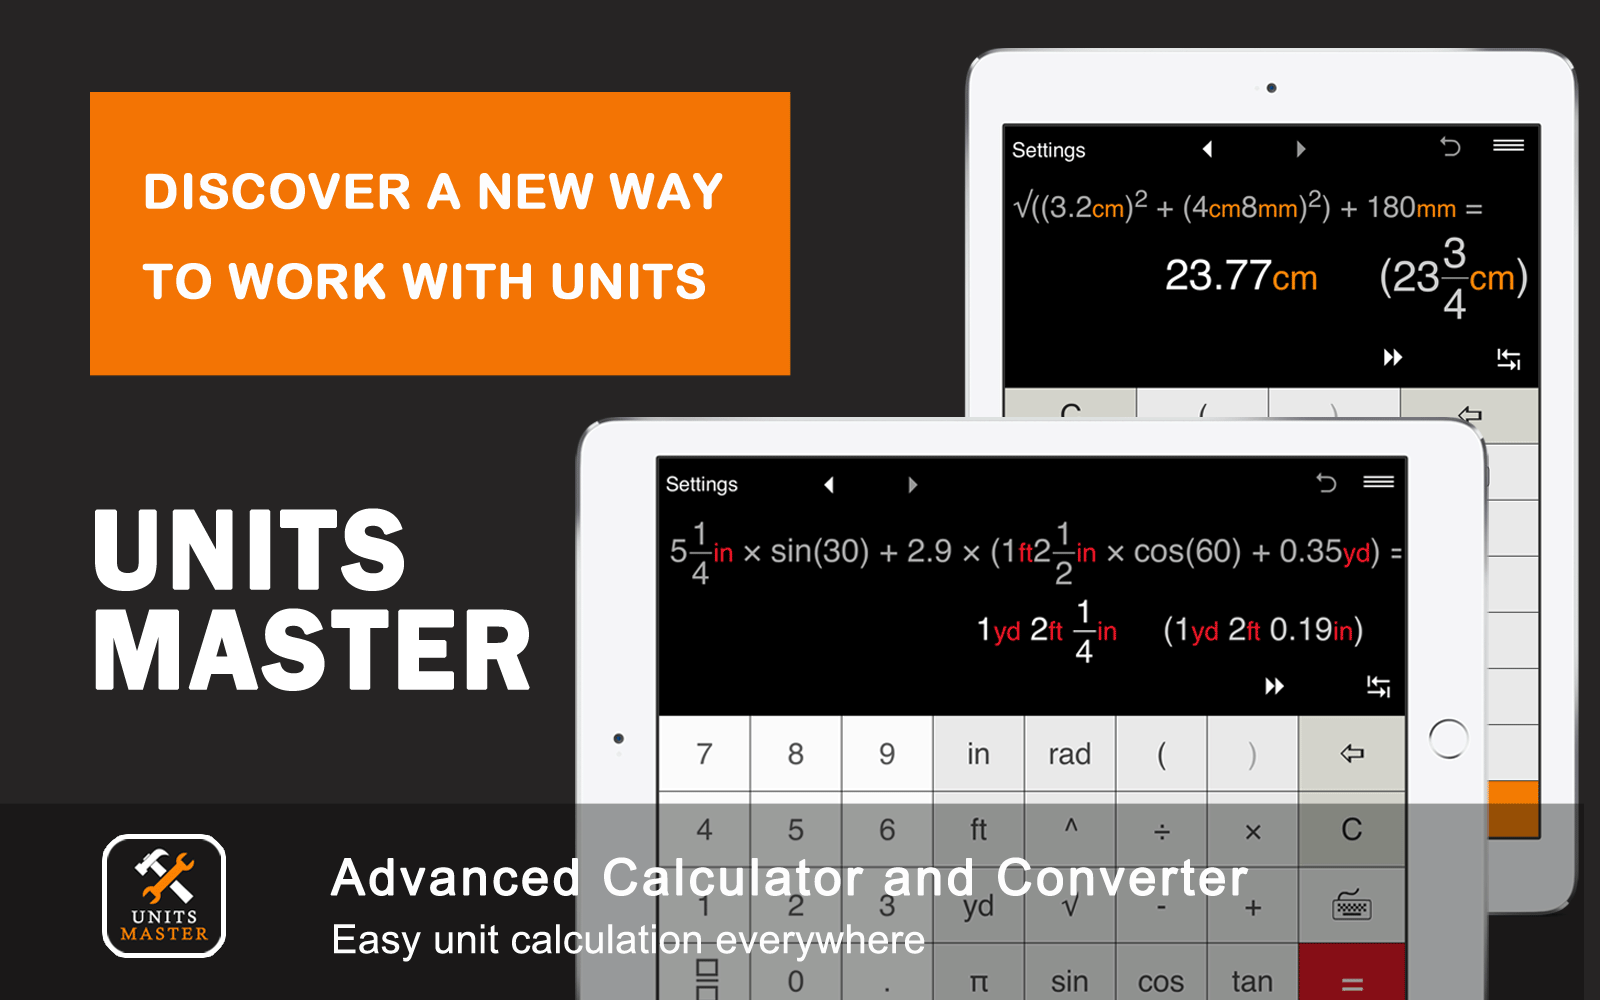 Unit Calculator and Converter